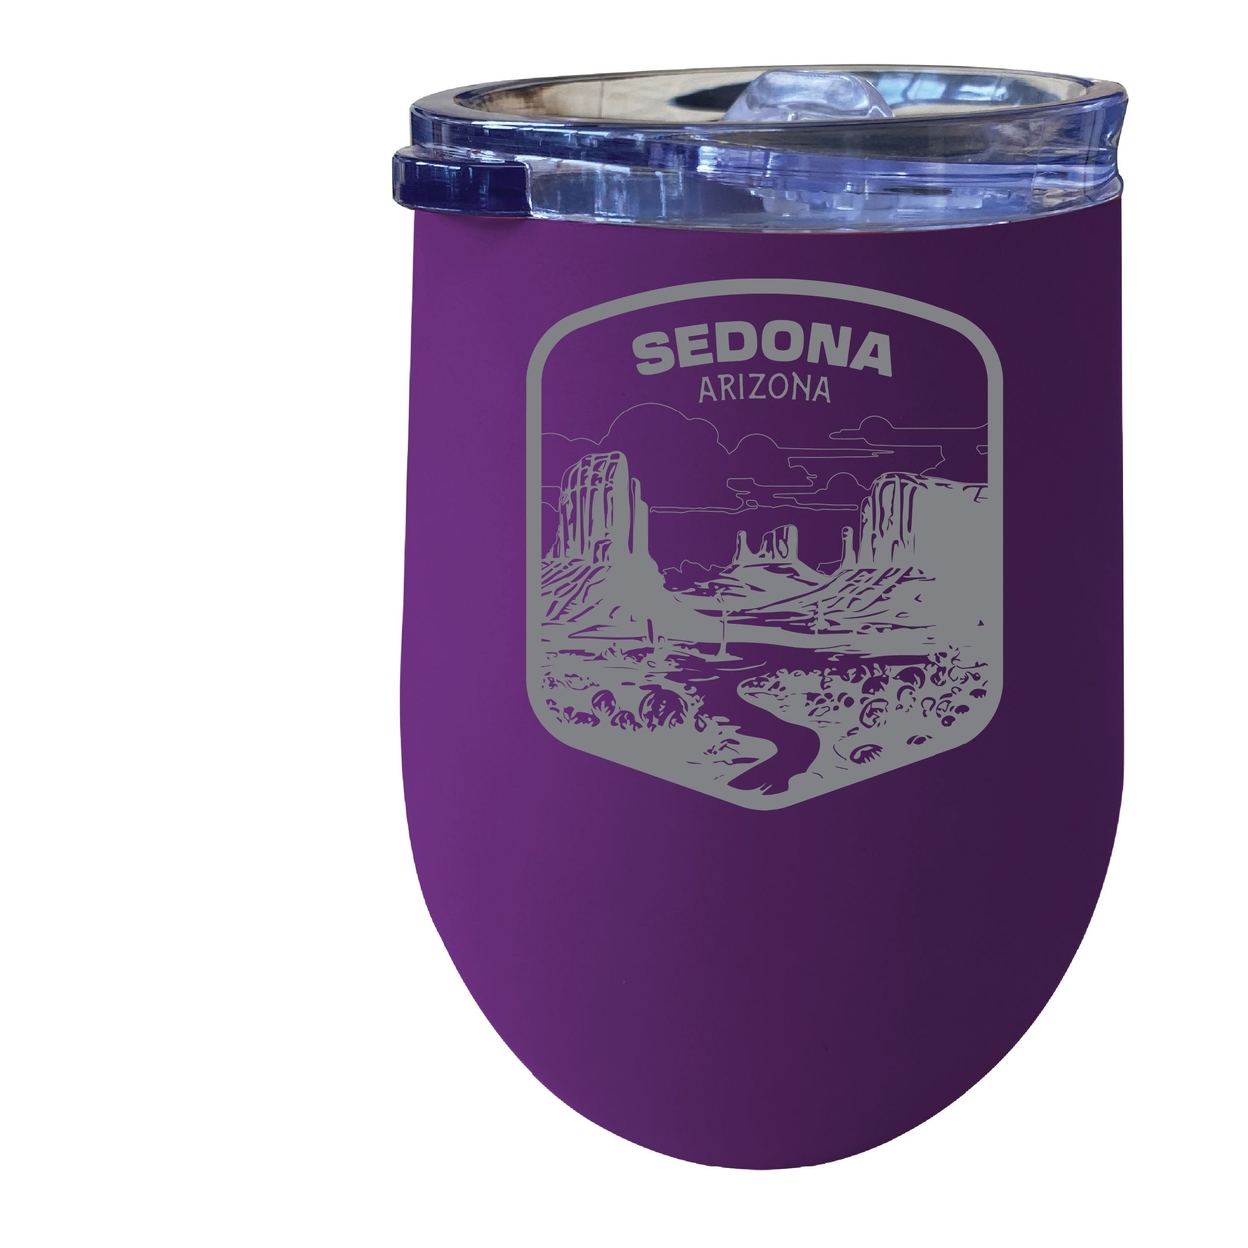 Sedona Arizona Souvenir 12 Oz Engraved Insulated Wine Stainless Steel Tumbler - Purple,,4-Pack